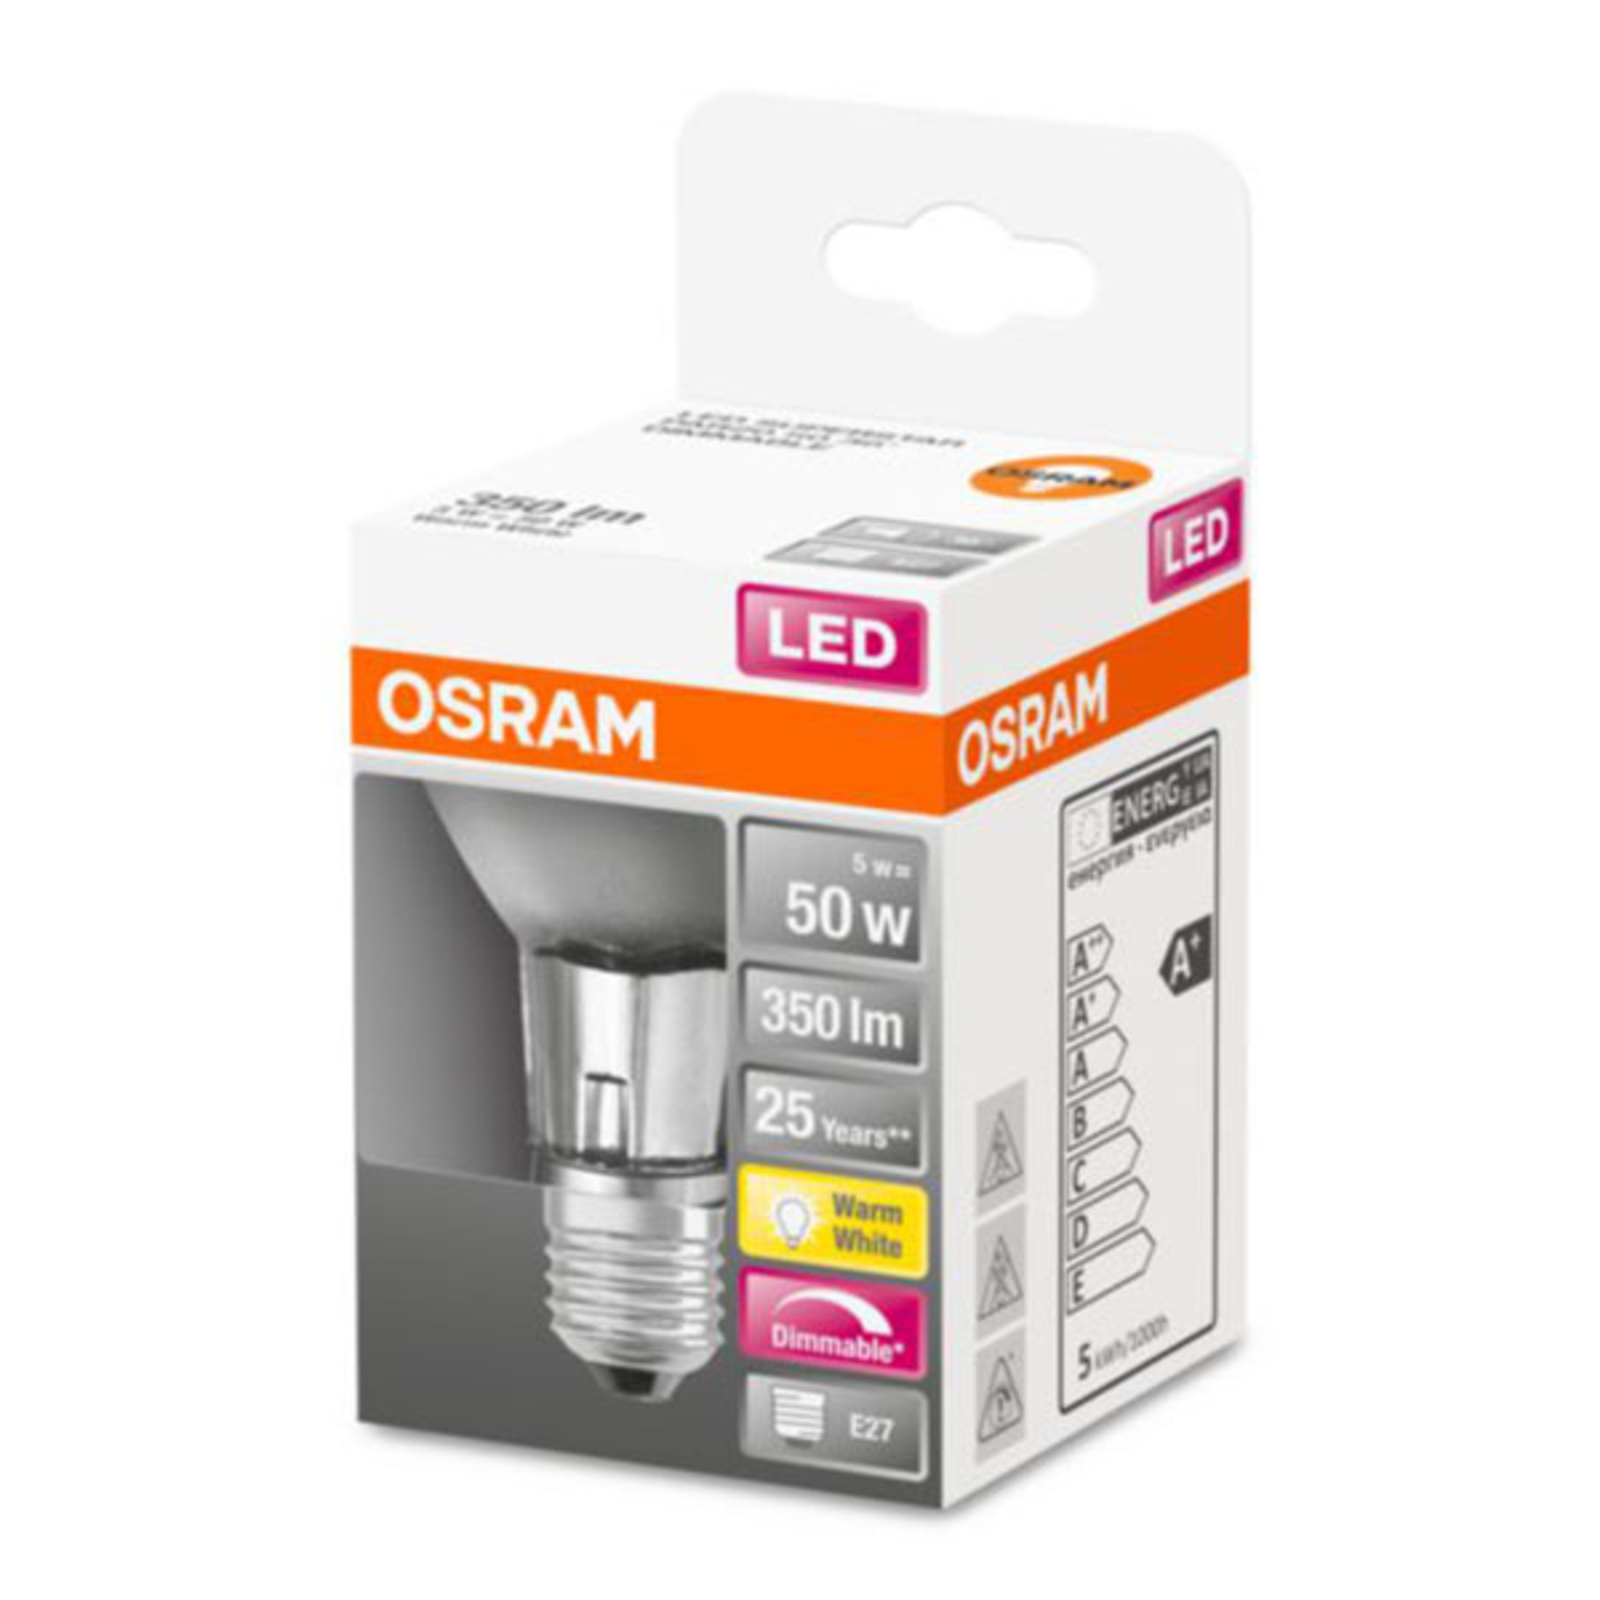 OSRAM LED lamp E27 6,4W PAR20 2.700K dimbaar